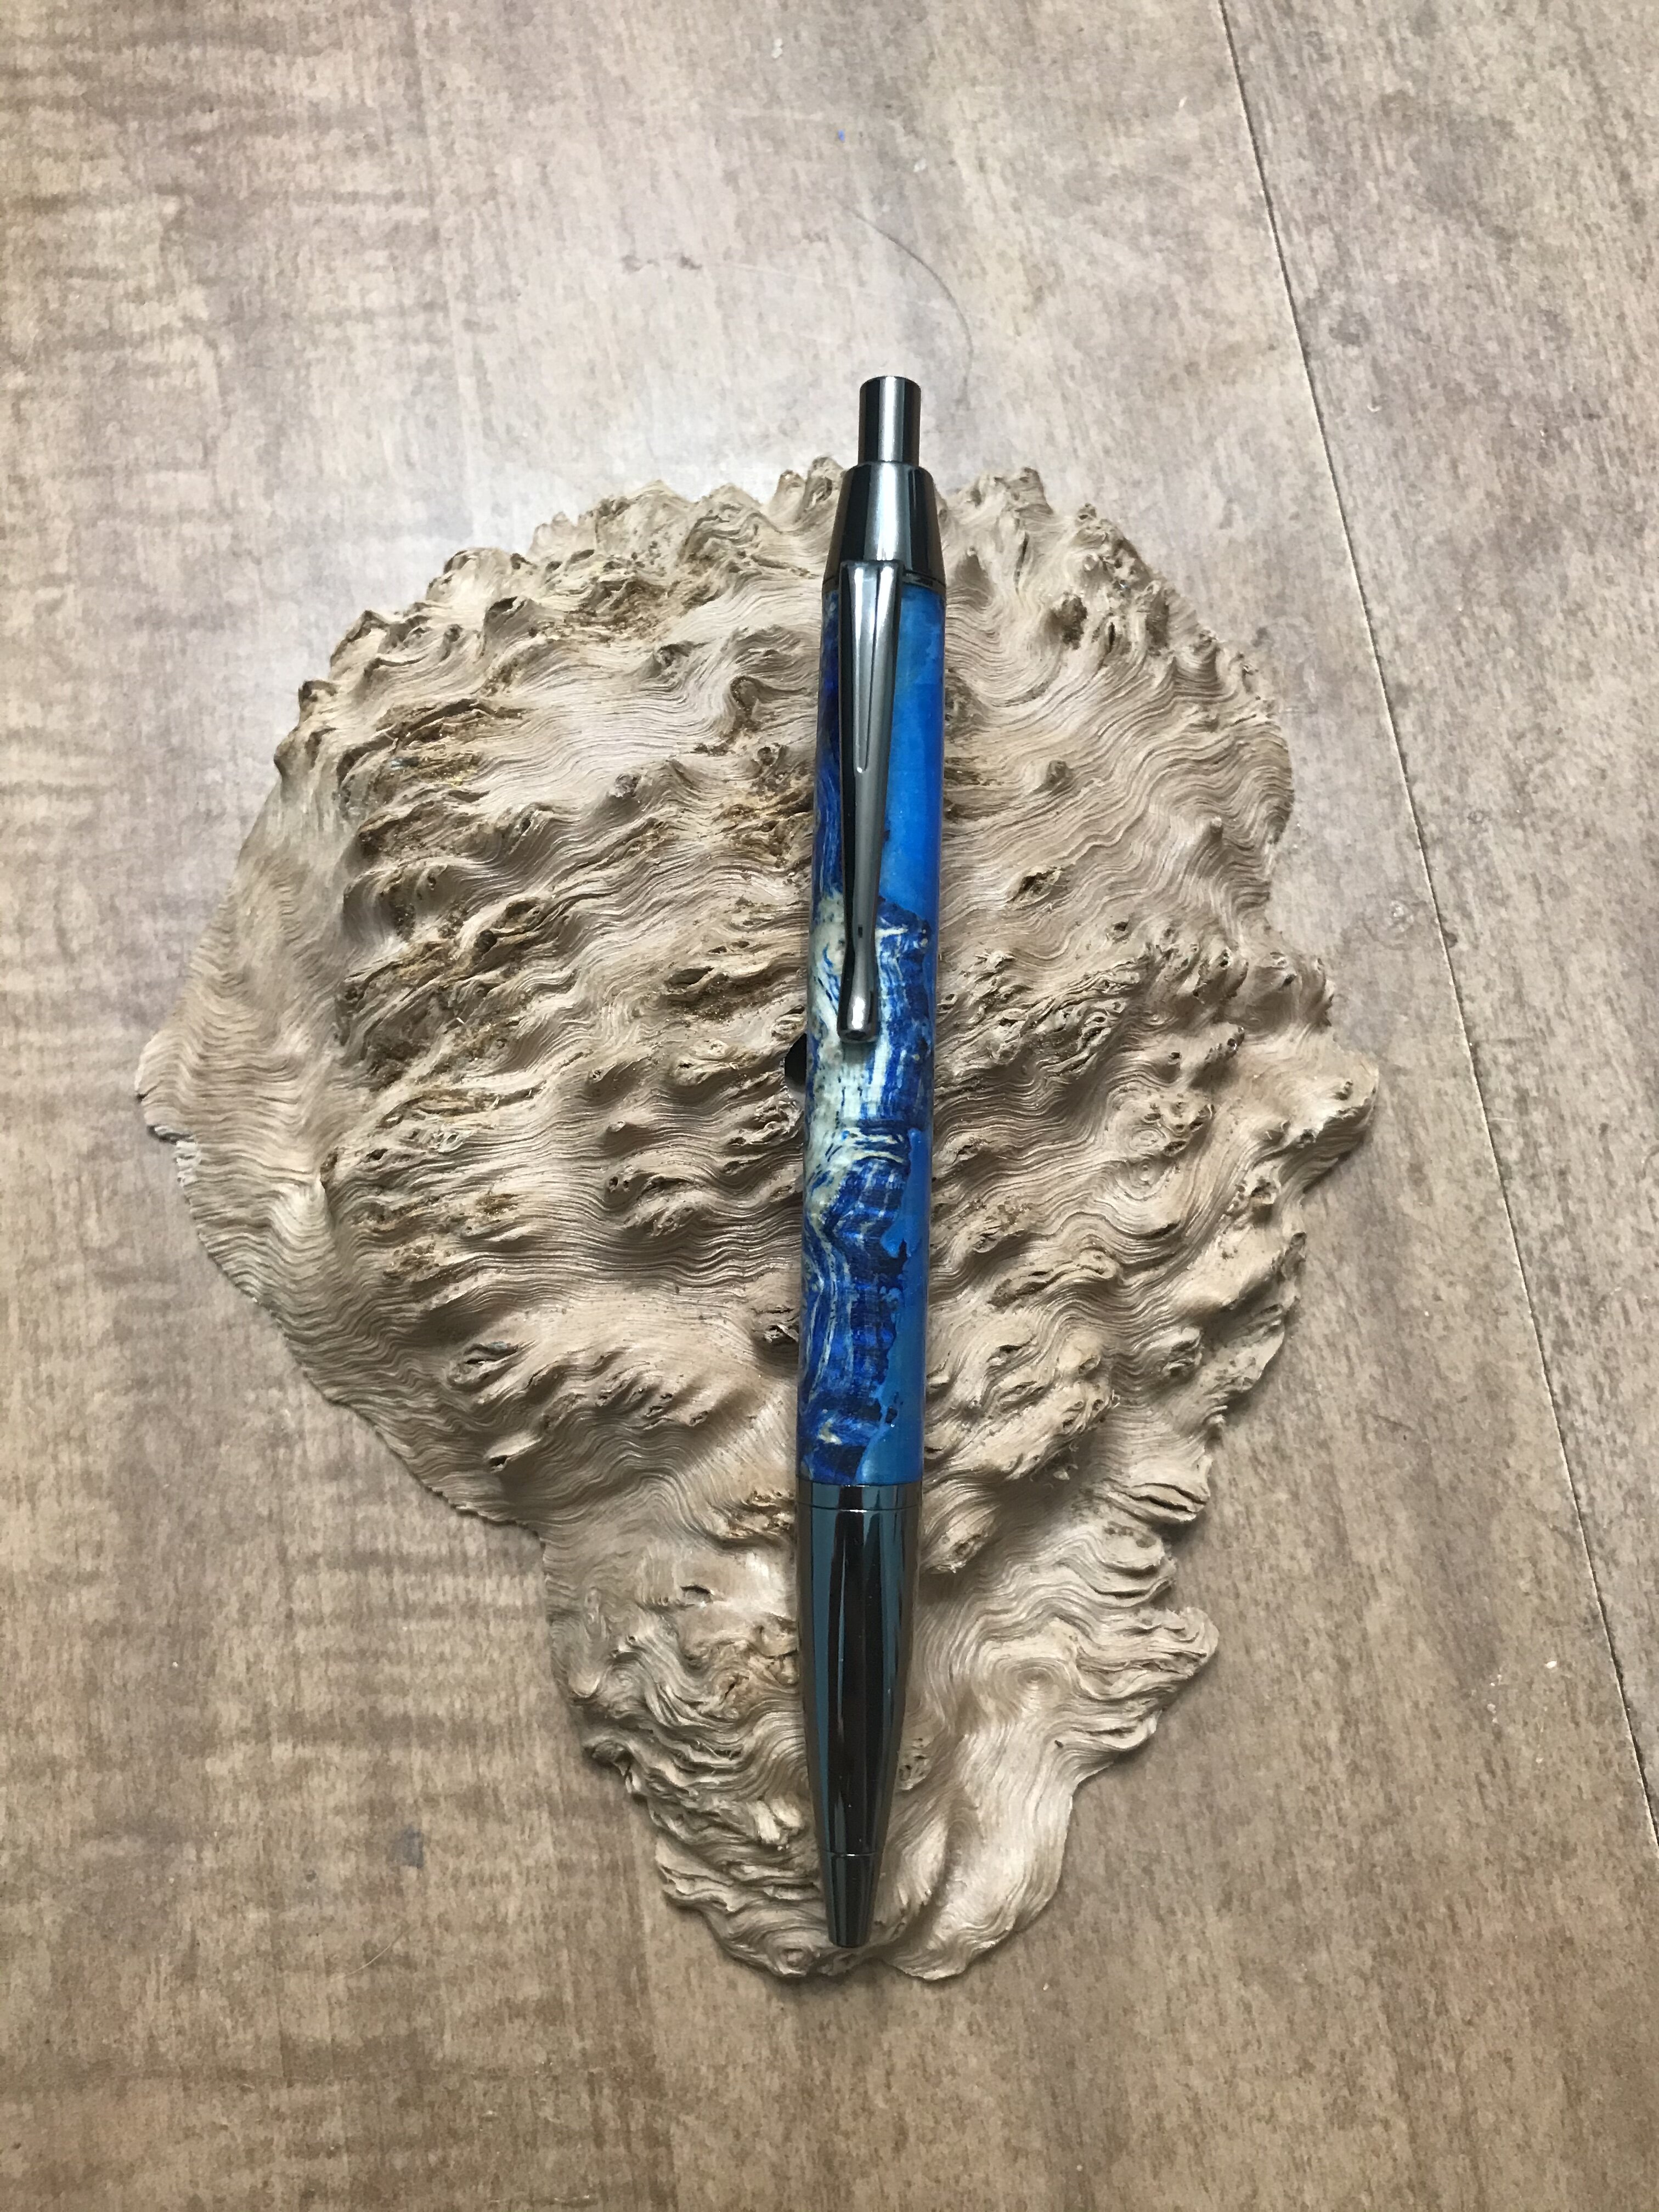 Blue Dyed Black Ash Burl with Blue Resin on a Devin Gun Metal Click Pen